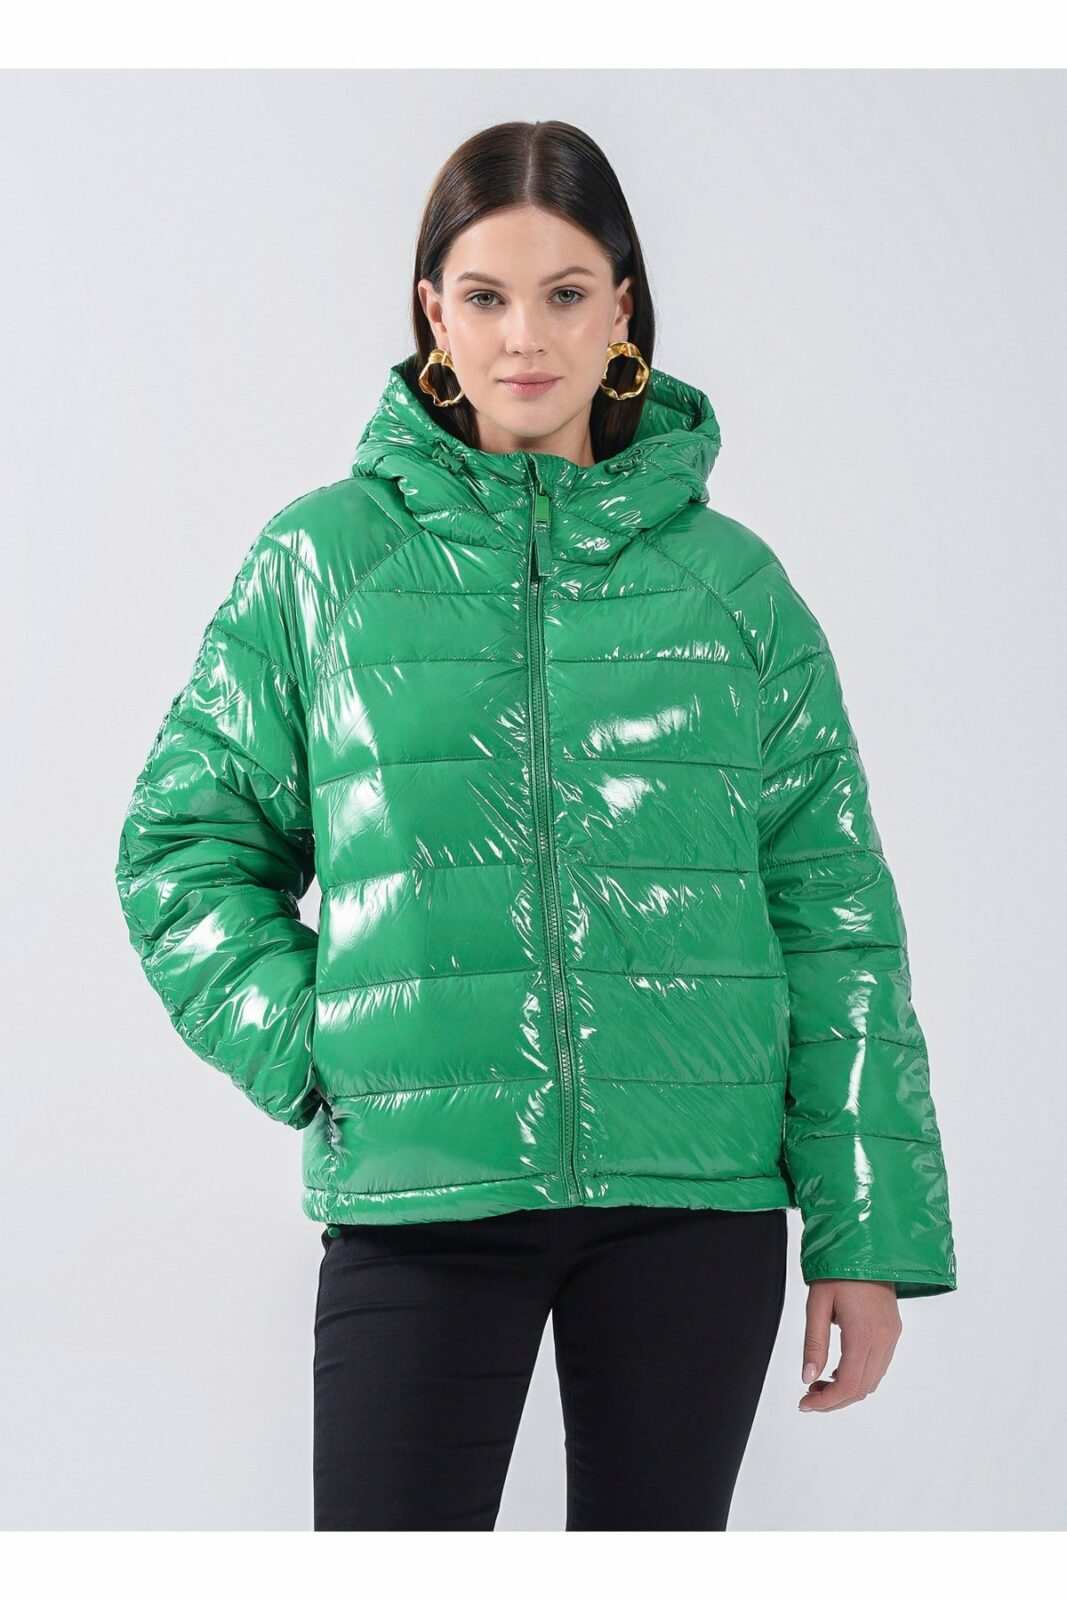 Koton Winter Jacket - Green